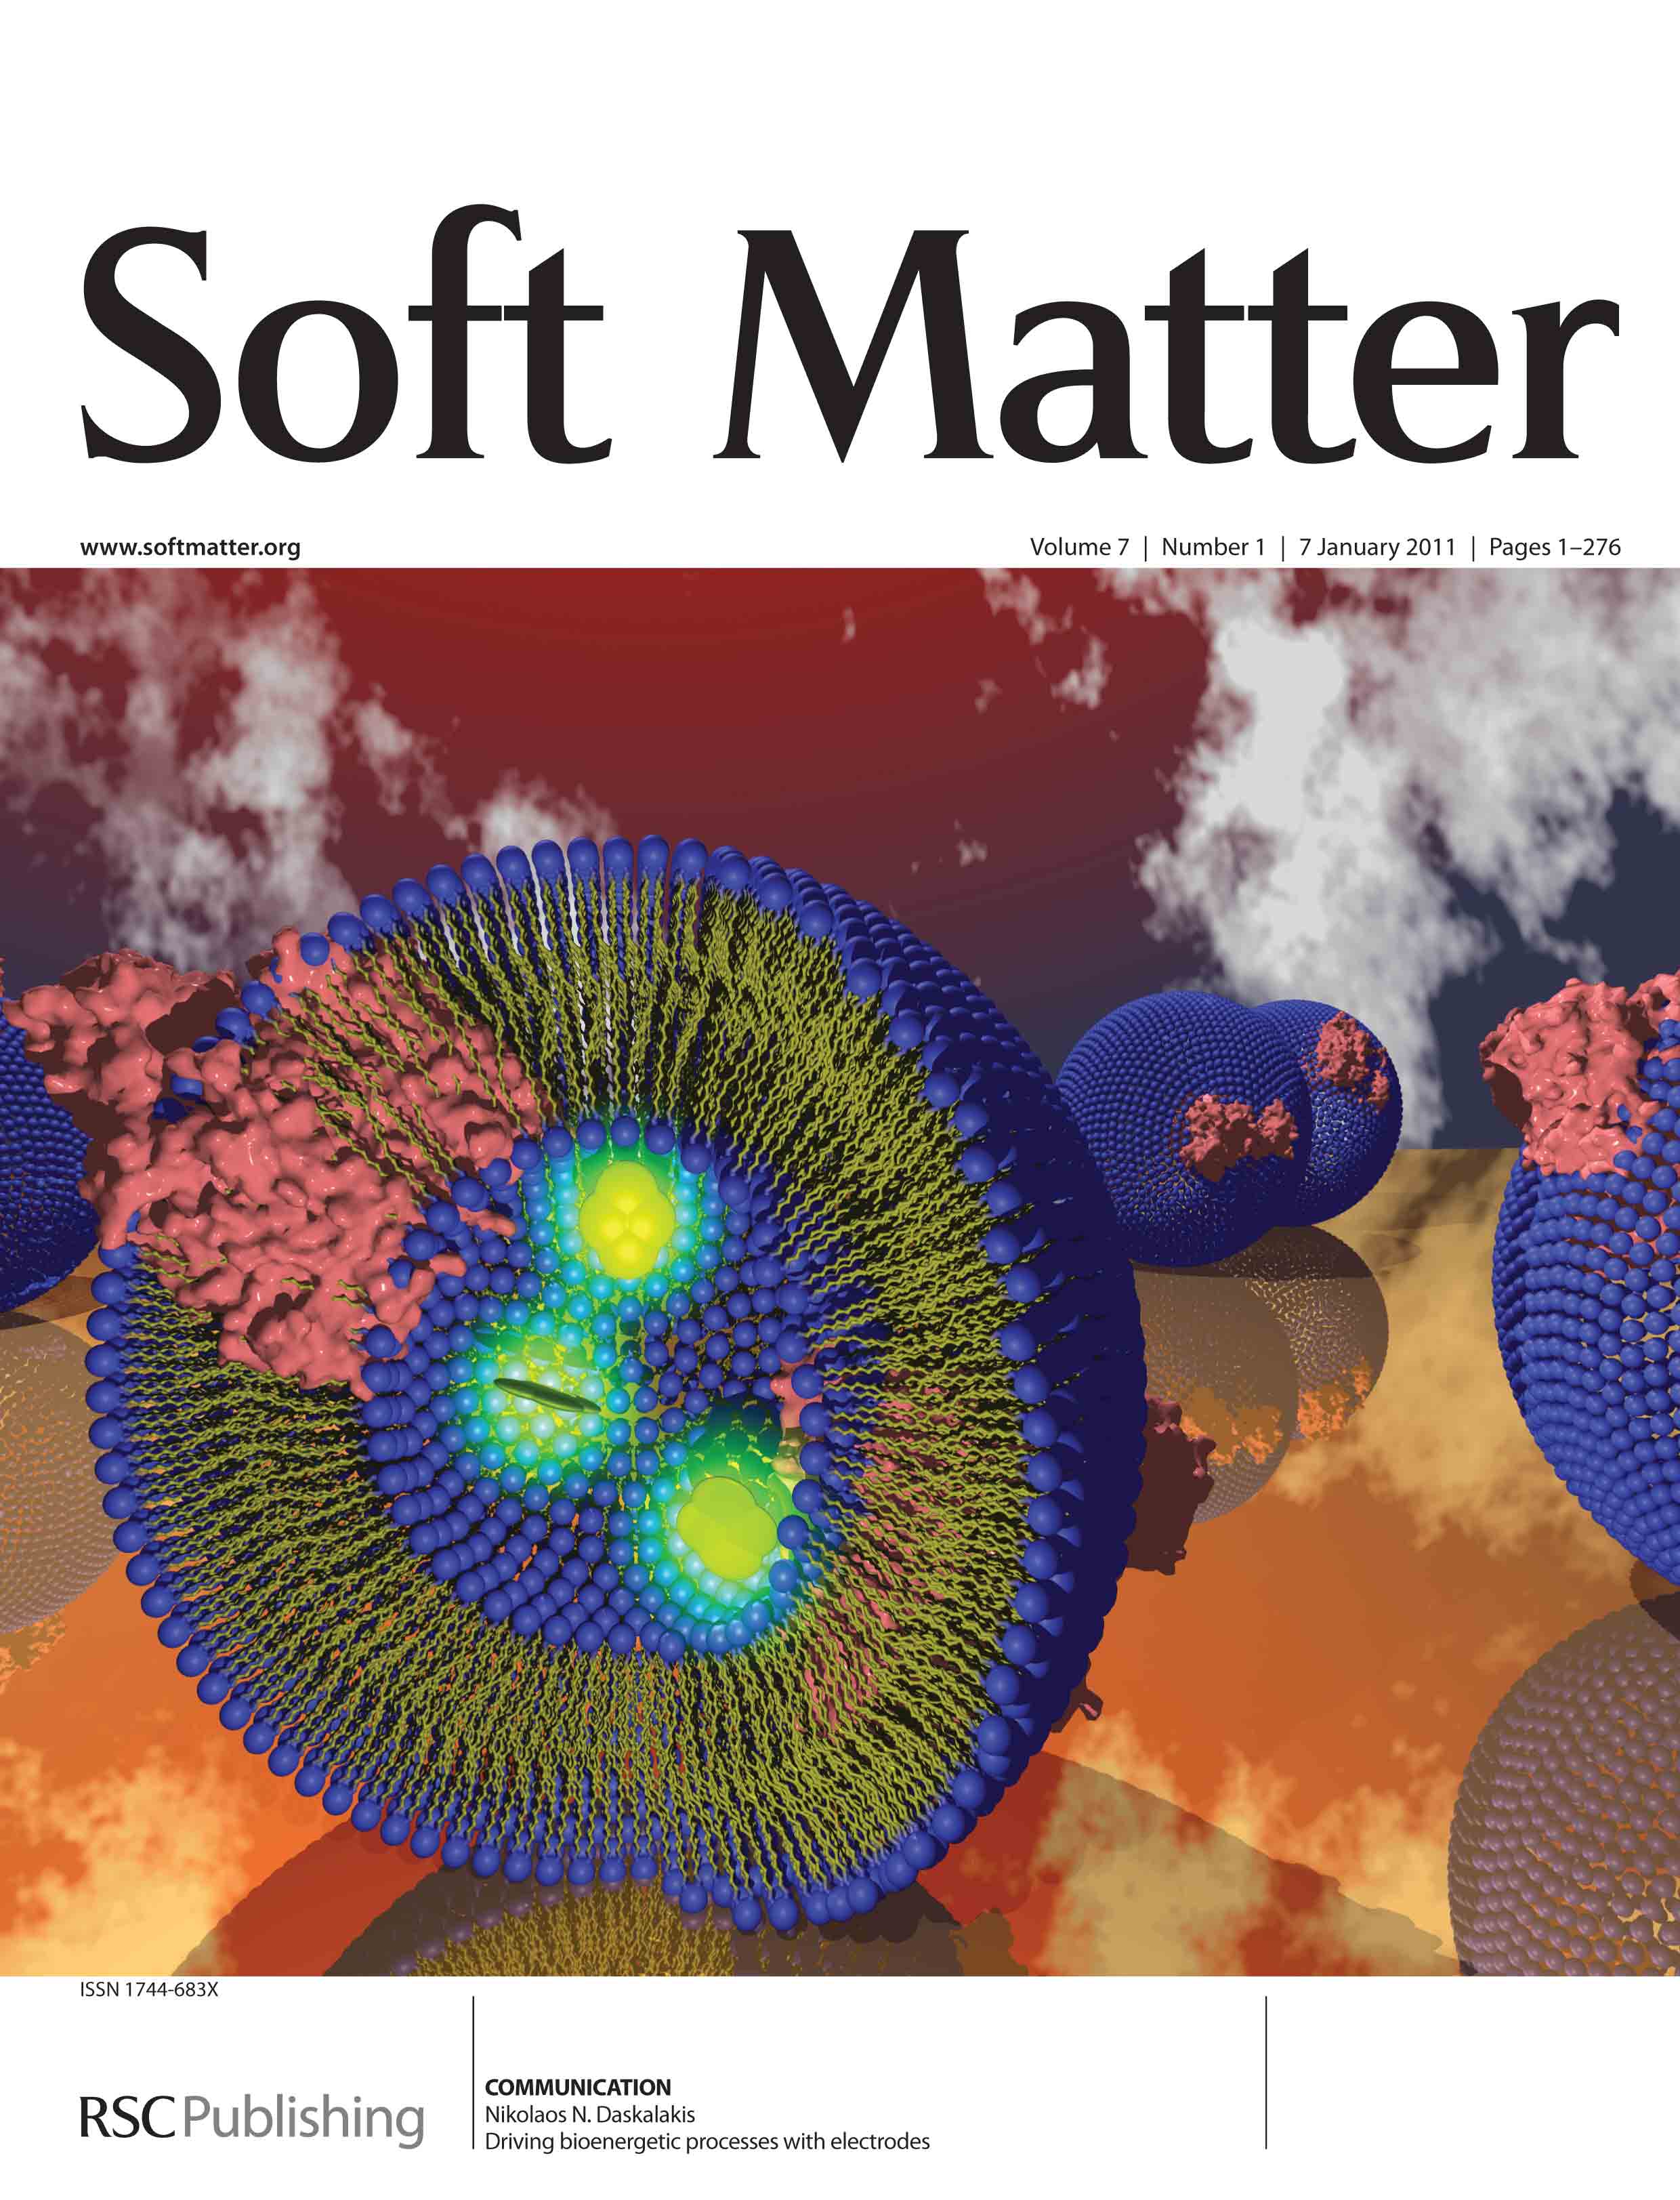 Matter issue. Soft matter. Supramolecular Soft matter. History of Soft matter. Introduction to Soft matter.